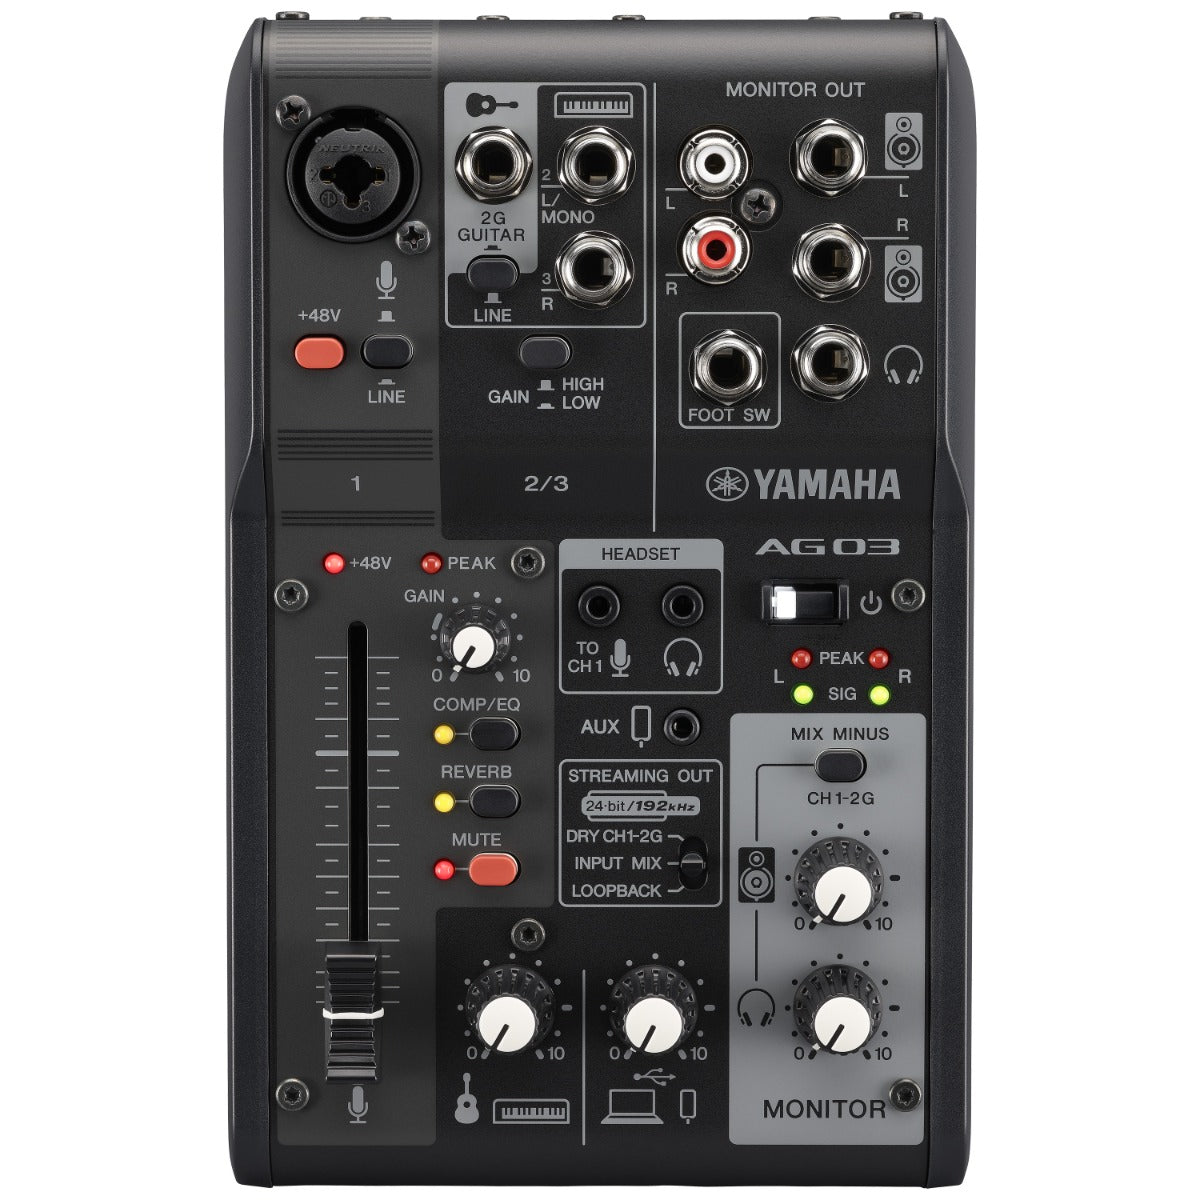 Yamaha AG03 MK2 Live Streaming Mixer and Interface - Black view 2